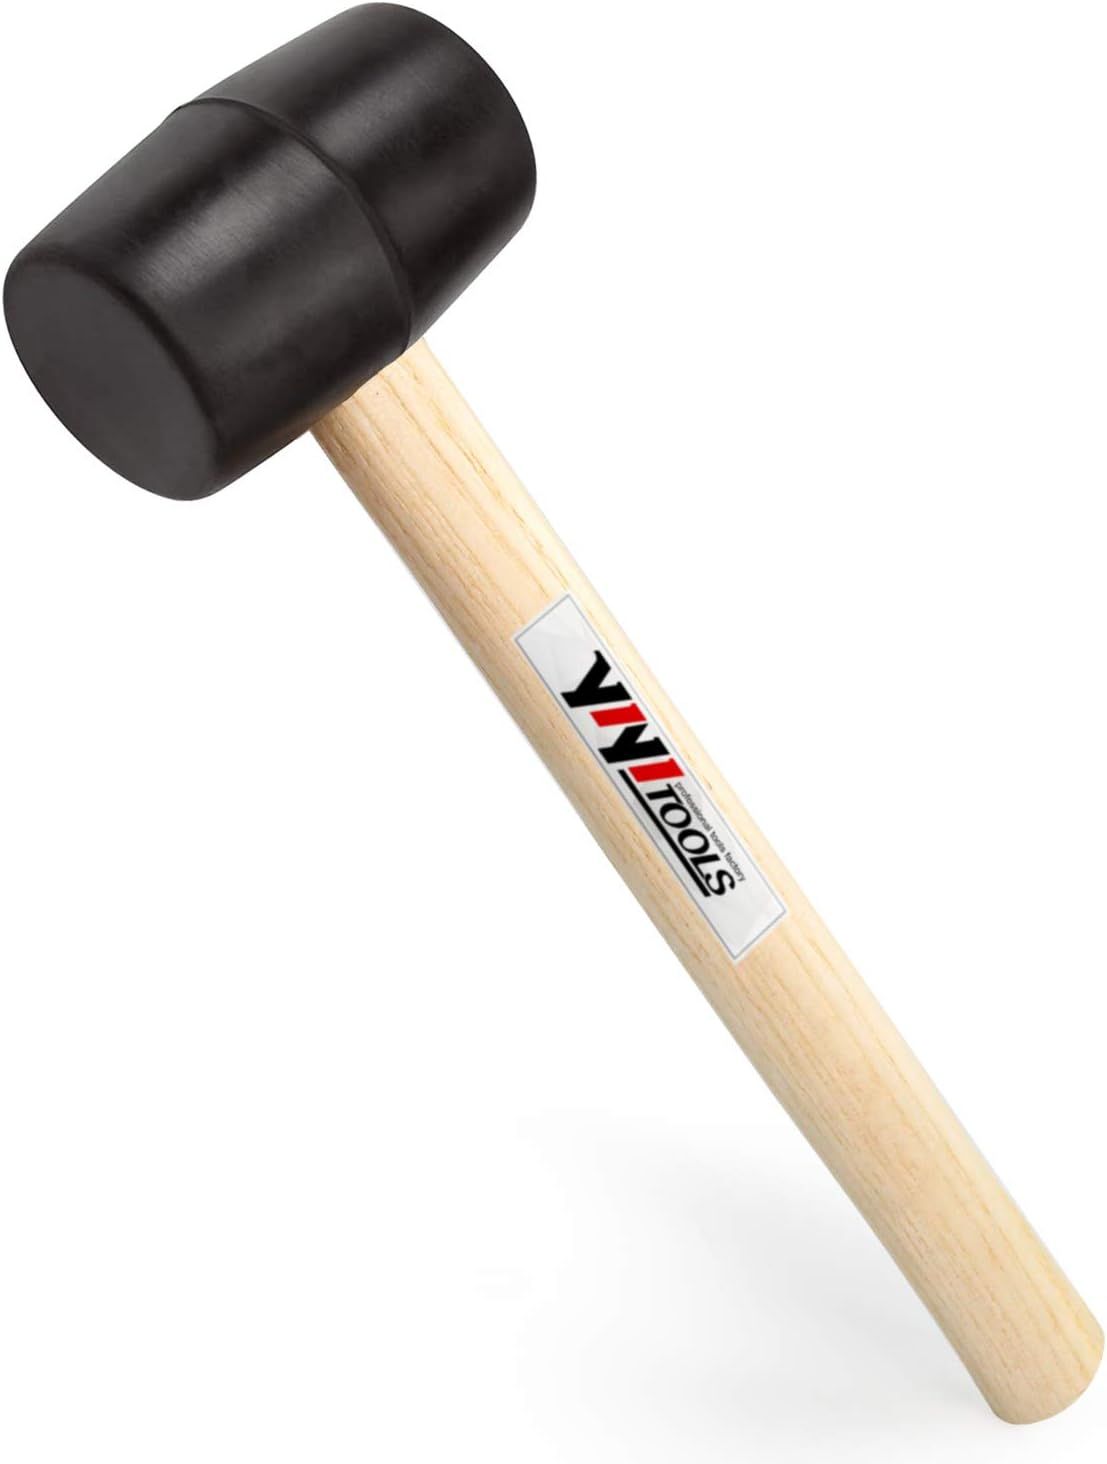 YIYITOOLS YY-2-005 Rubber Mallet Hammer With Wood Handle–8-oz, black | Amazon (US)